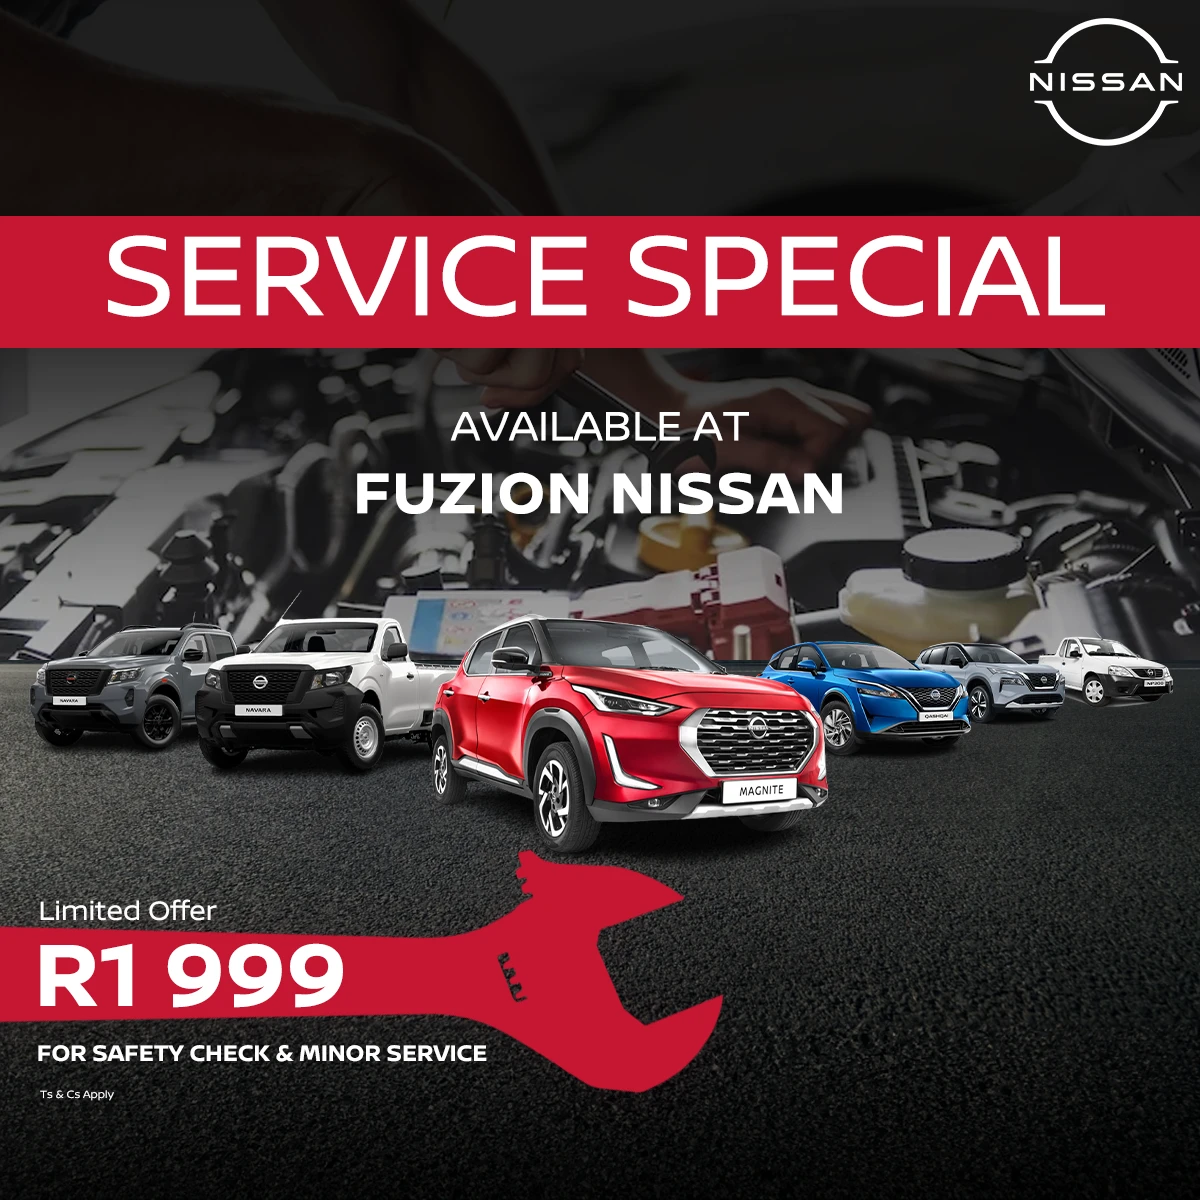 Fuzion Nissan Service Special